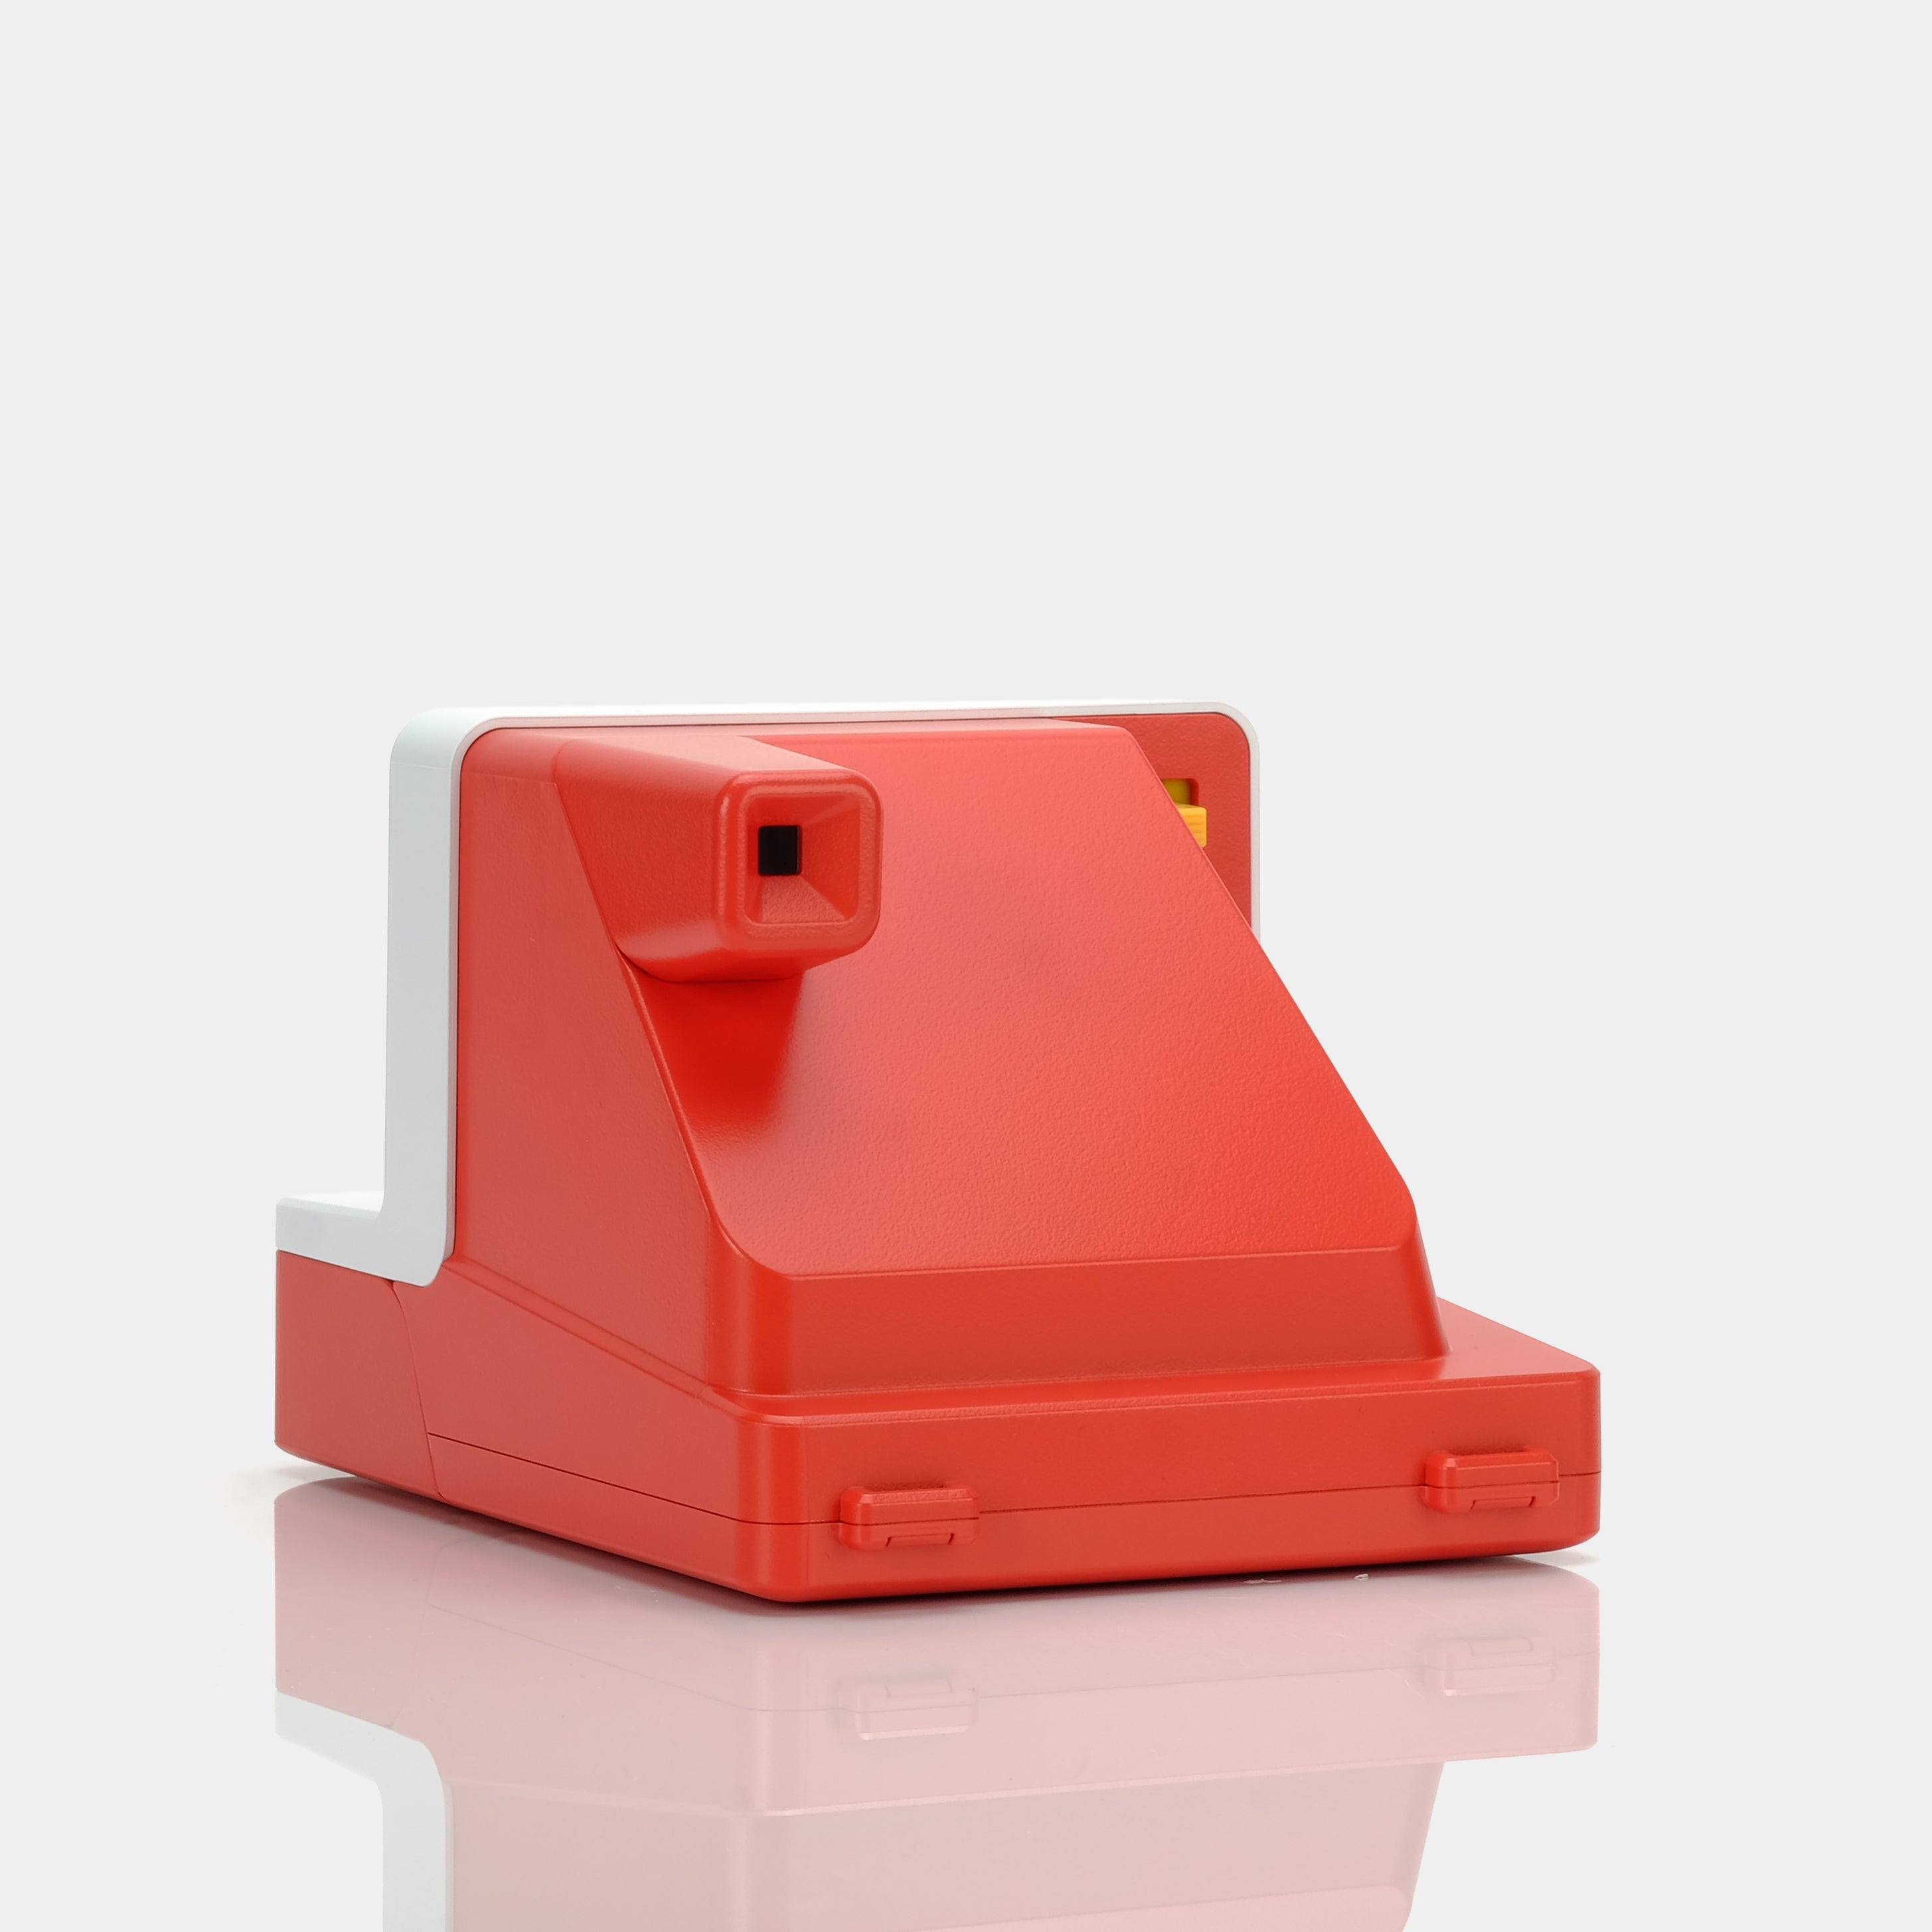 Polaroid i-Type OneStep 2 Red Instant Film Camera - Refurbished